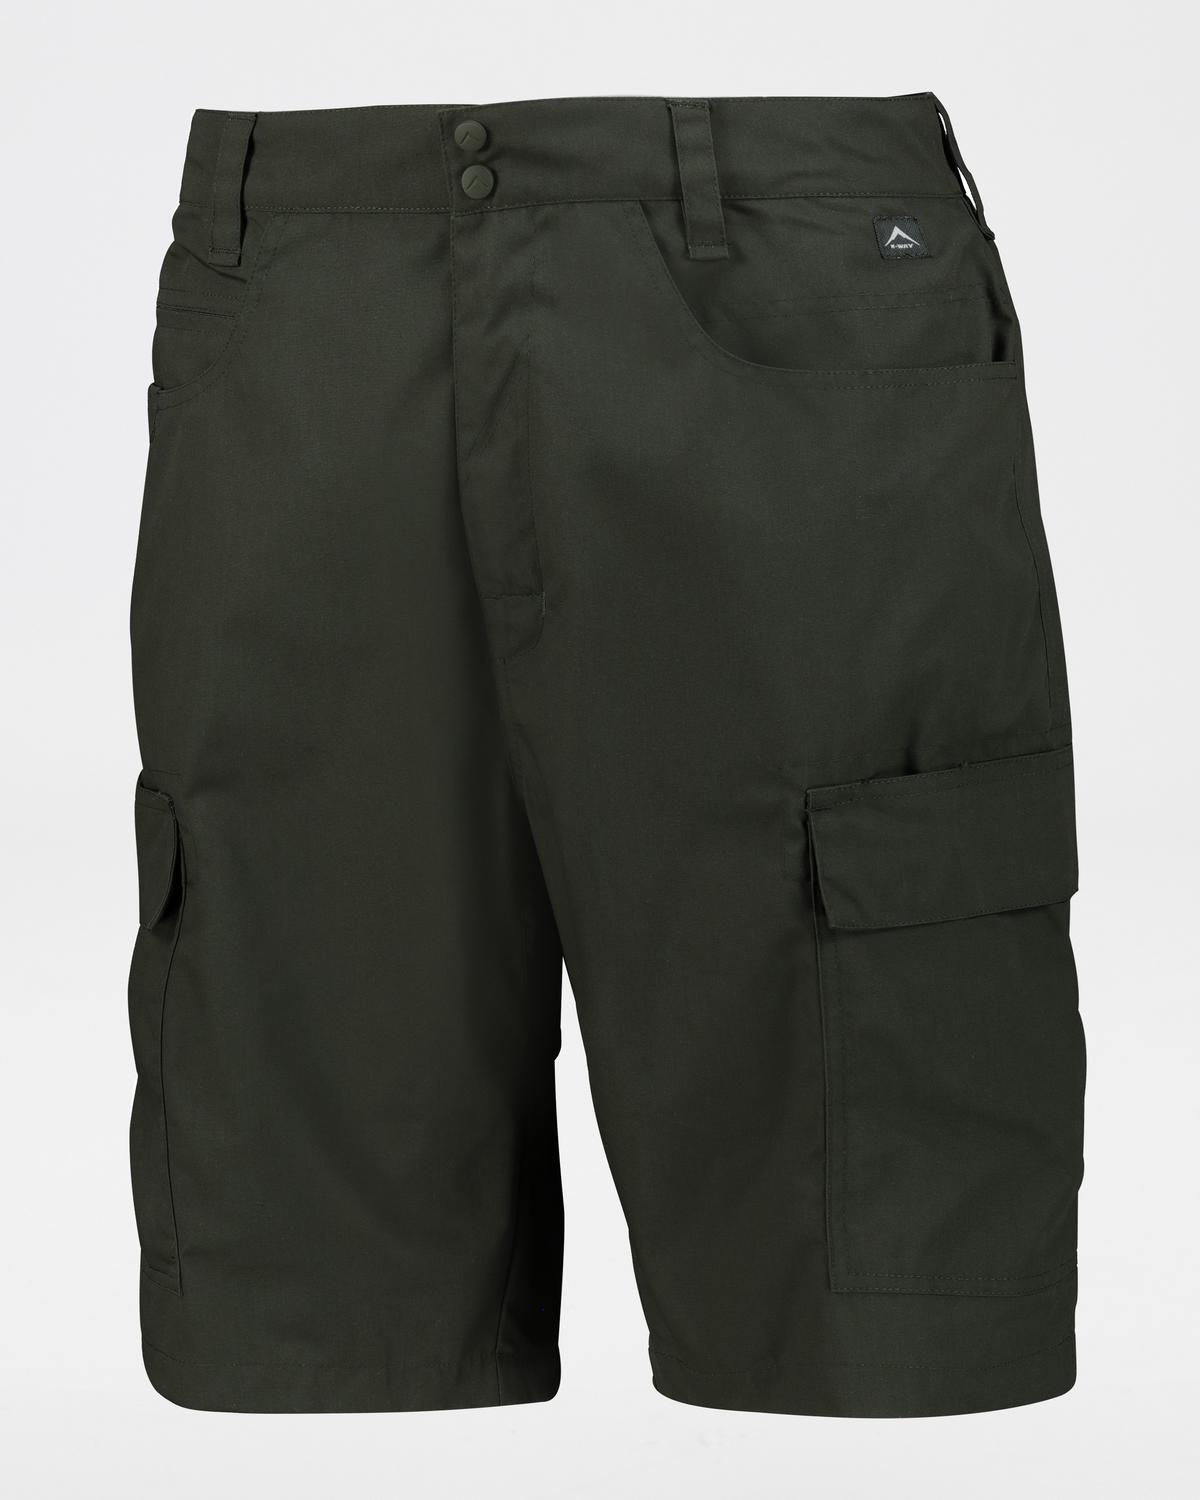 K-Way Expedition Series Men's Tech Cargo Shorts -  Dark Olive